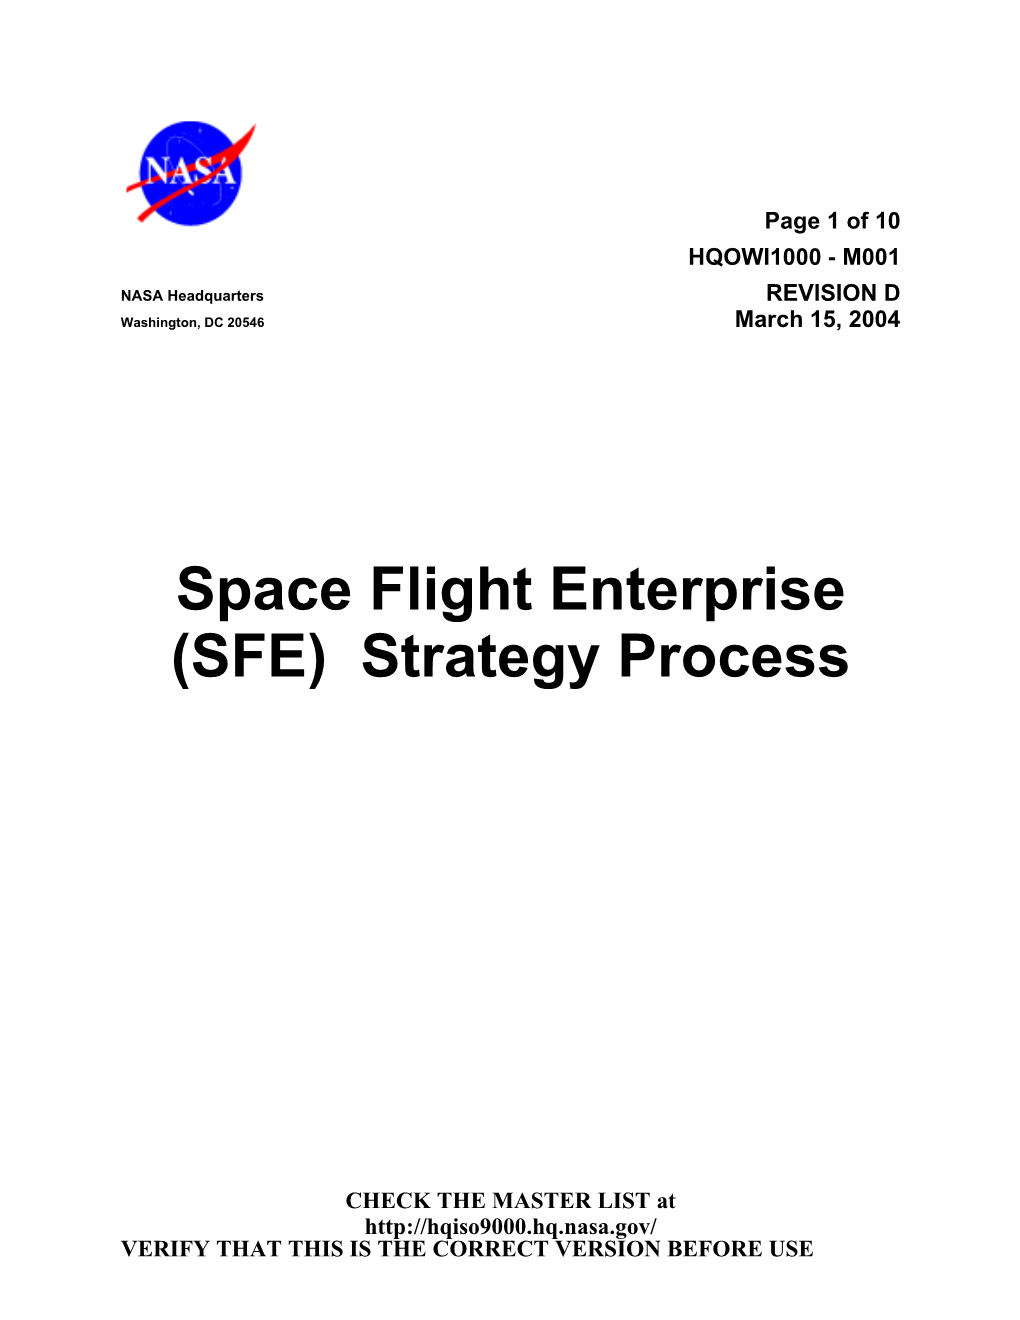 Space Flight Enterprise (SFE) Strategyprocess